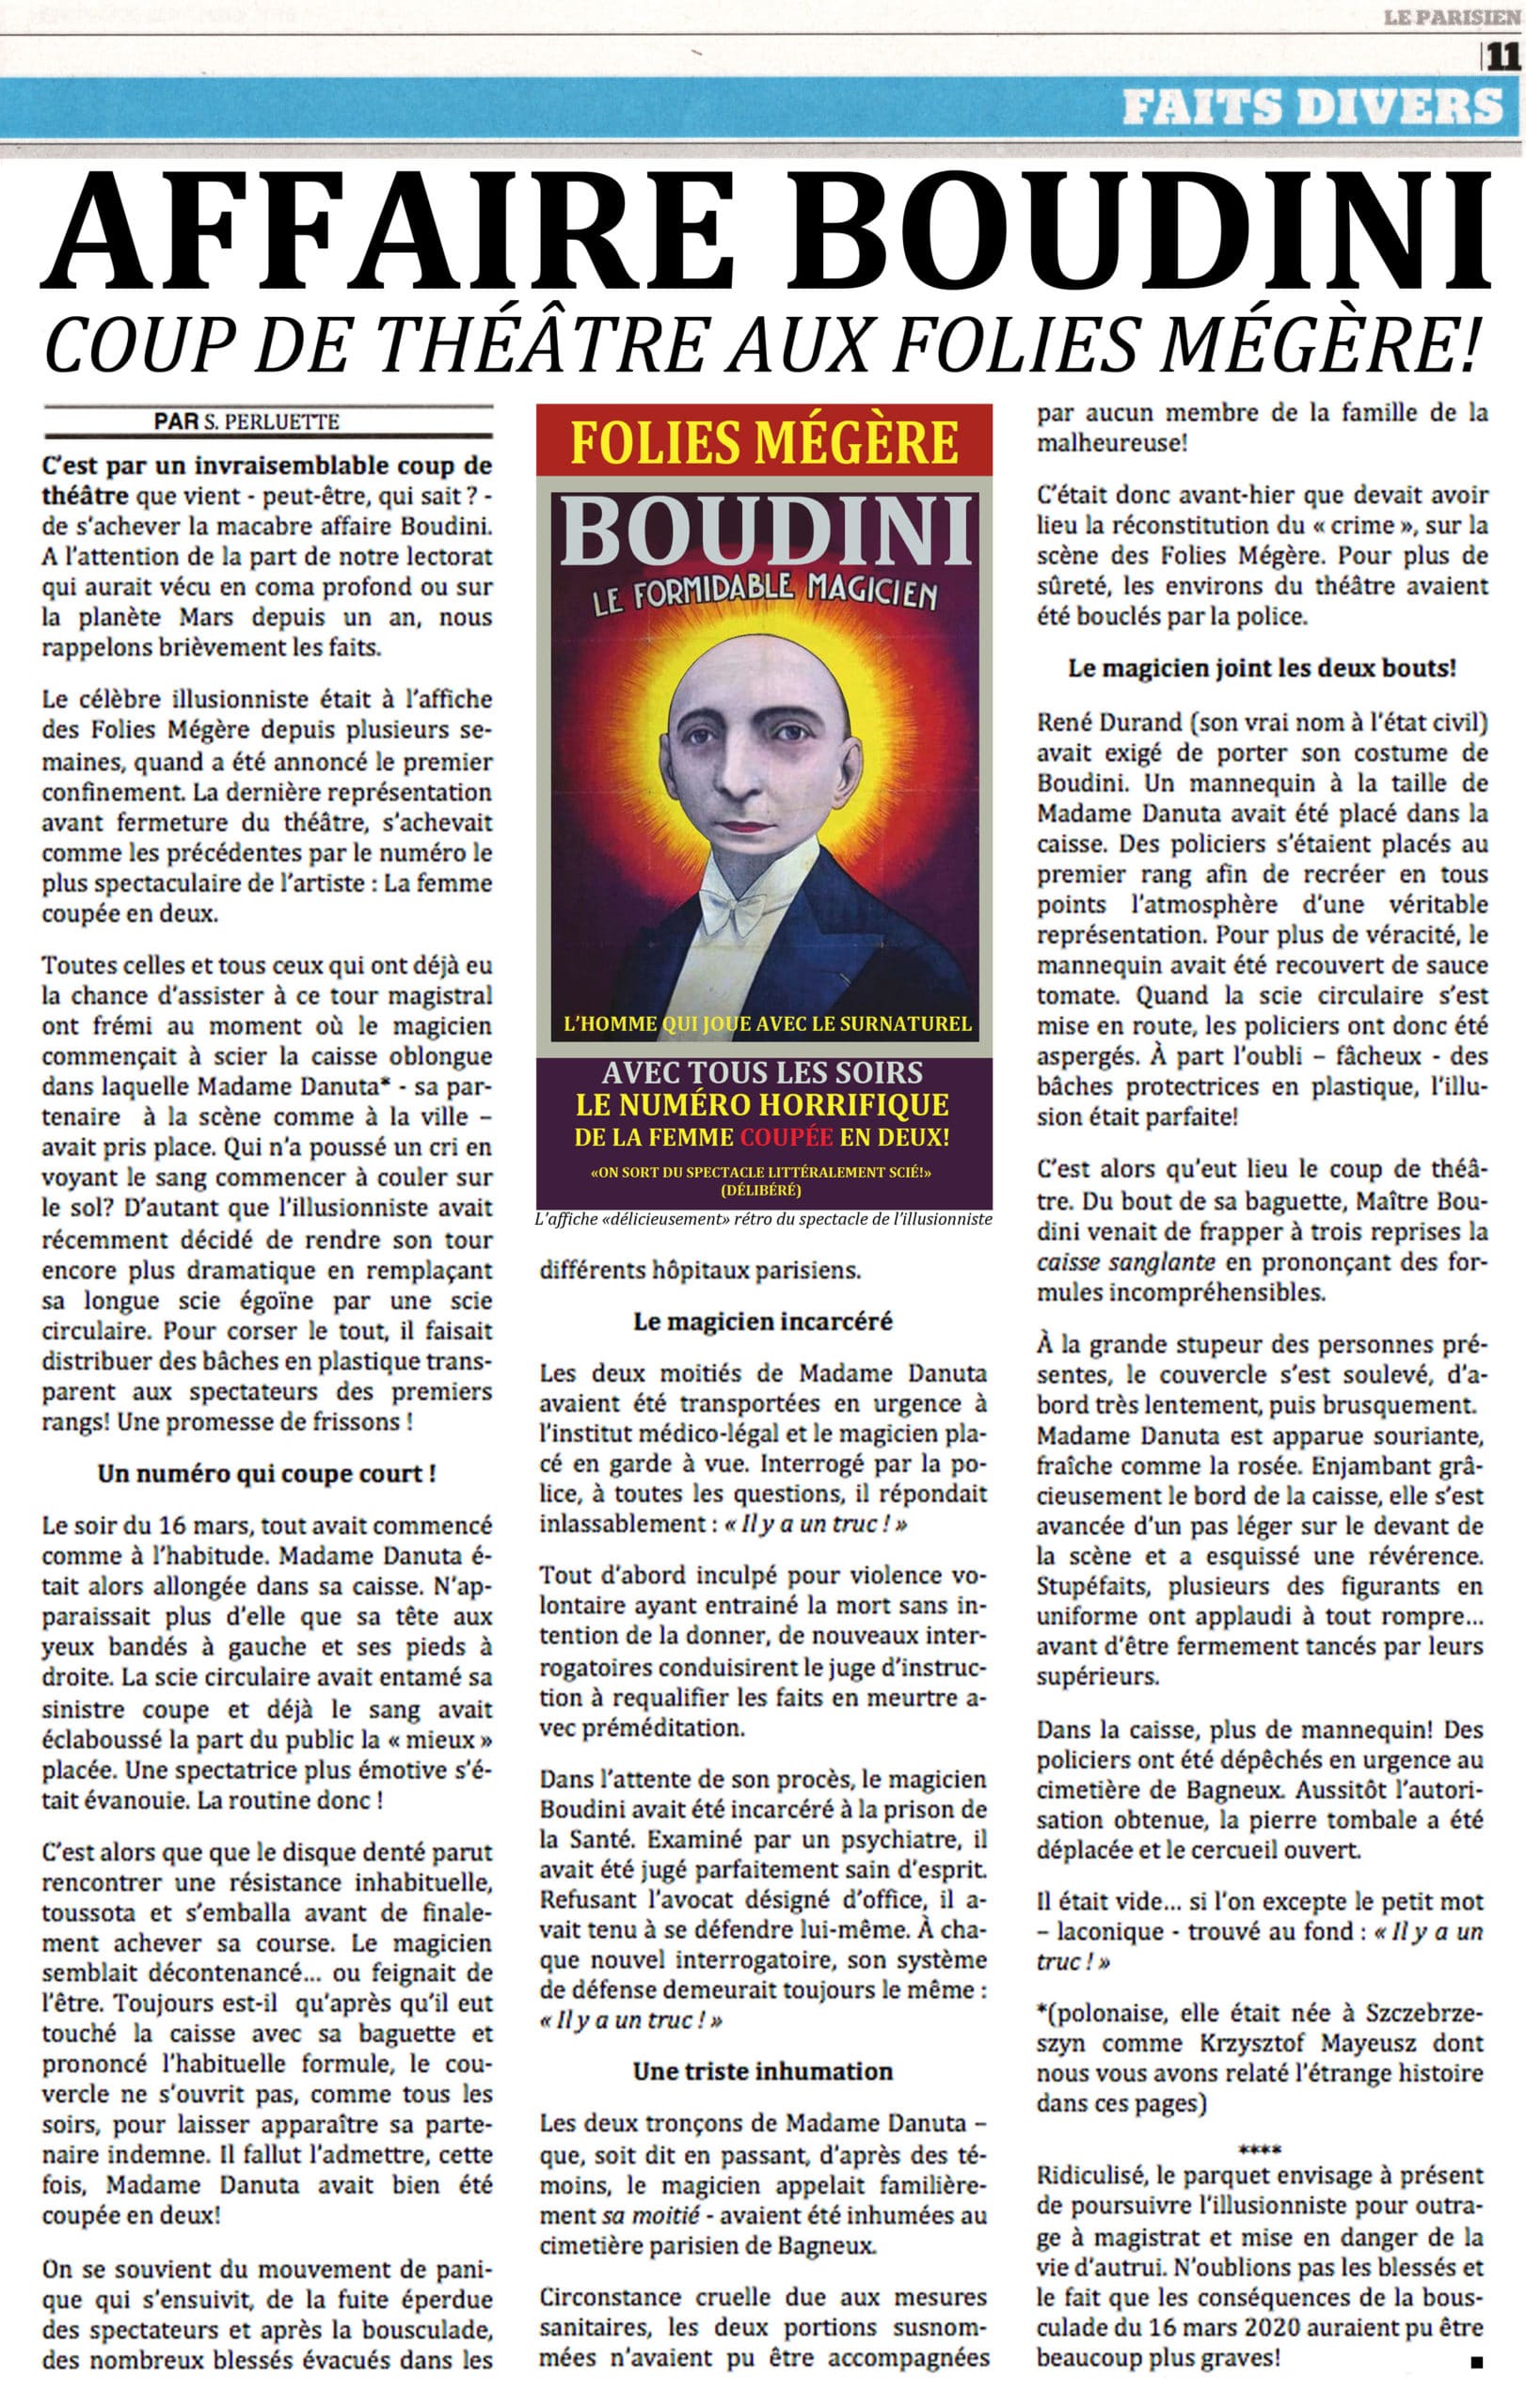 L’affaire Boudini